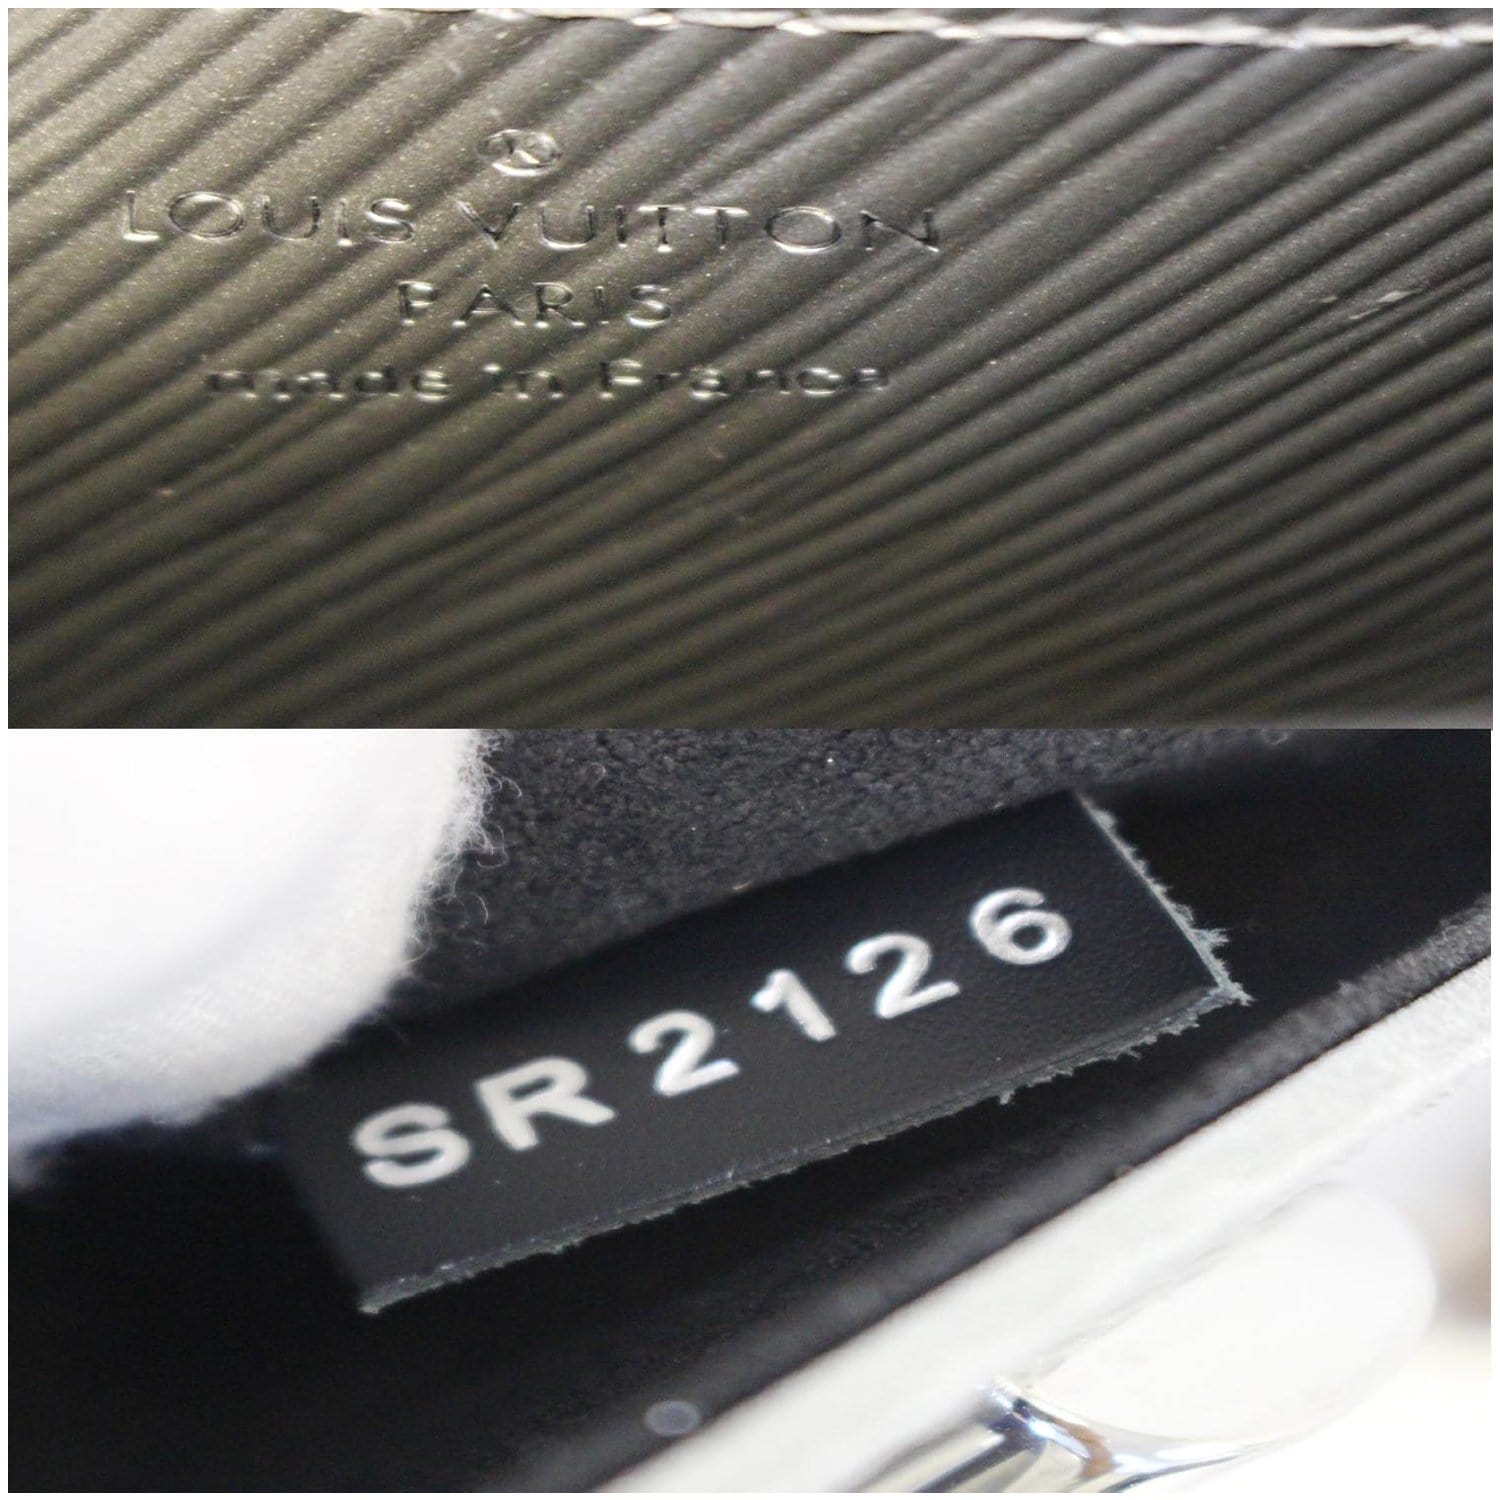 Louis Vuitton Silver Lizard Twist PM Handbag Limited Edition with Cites at  1stDibs  louis vuitton lizard bag, louis vuitton twist lizard, louis  vuitton rhinestone bag